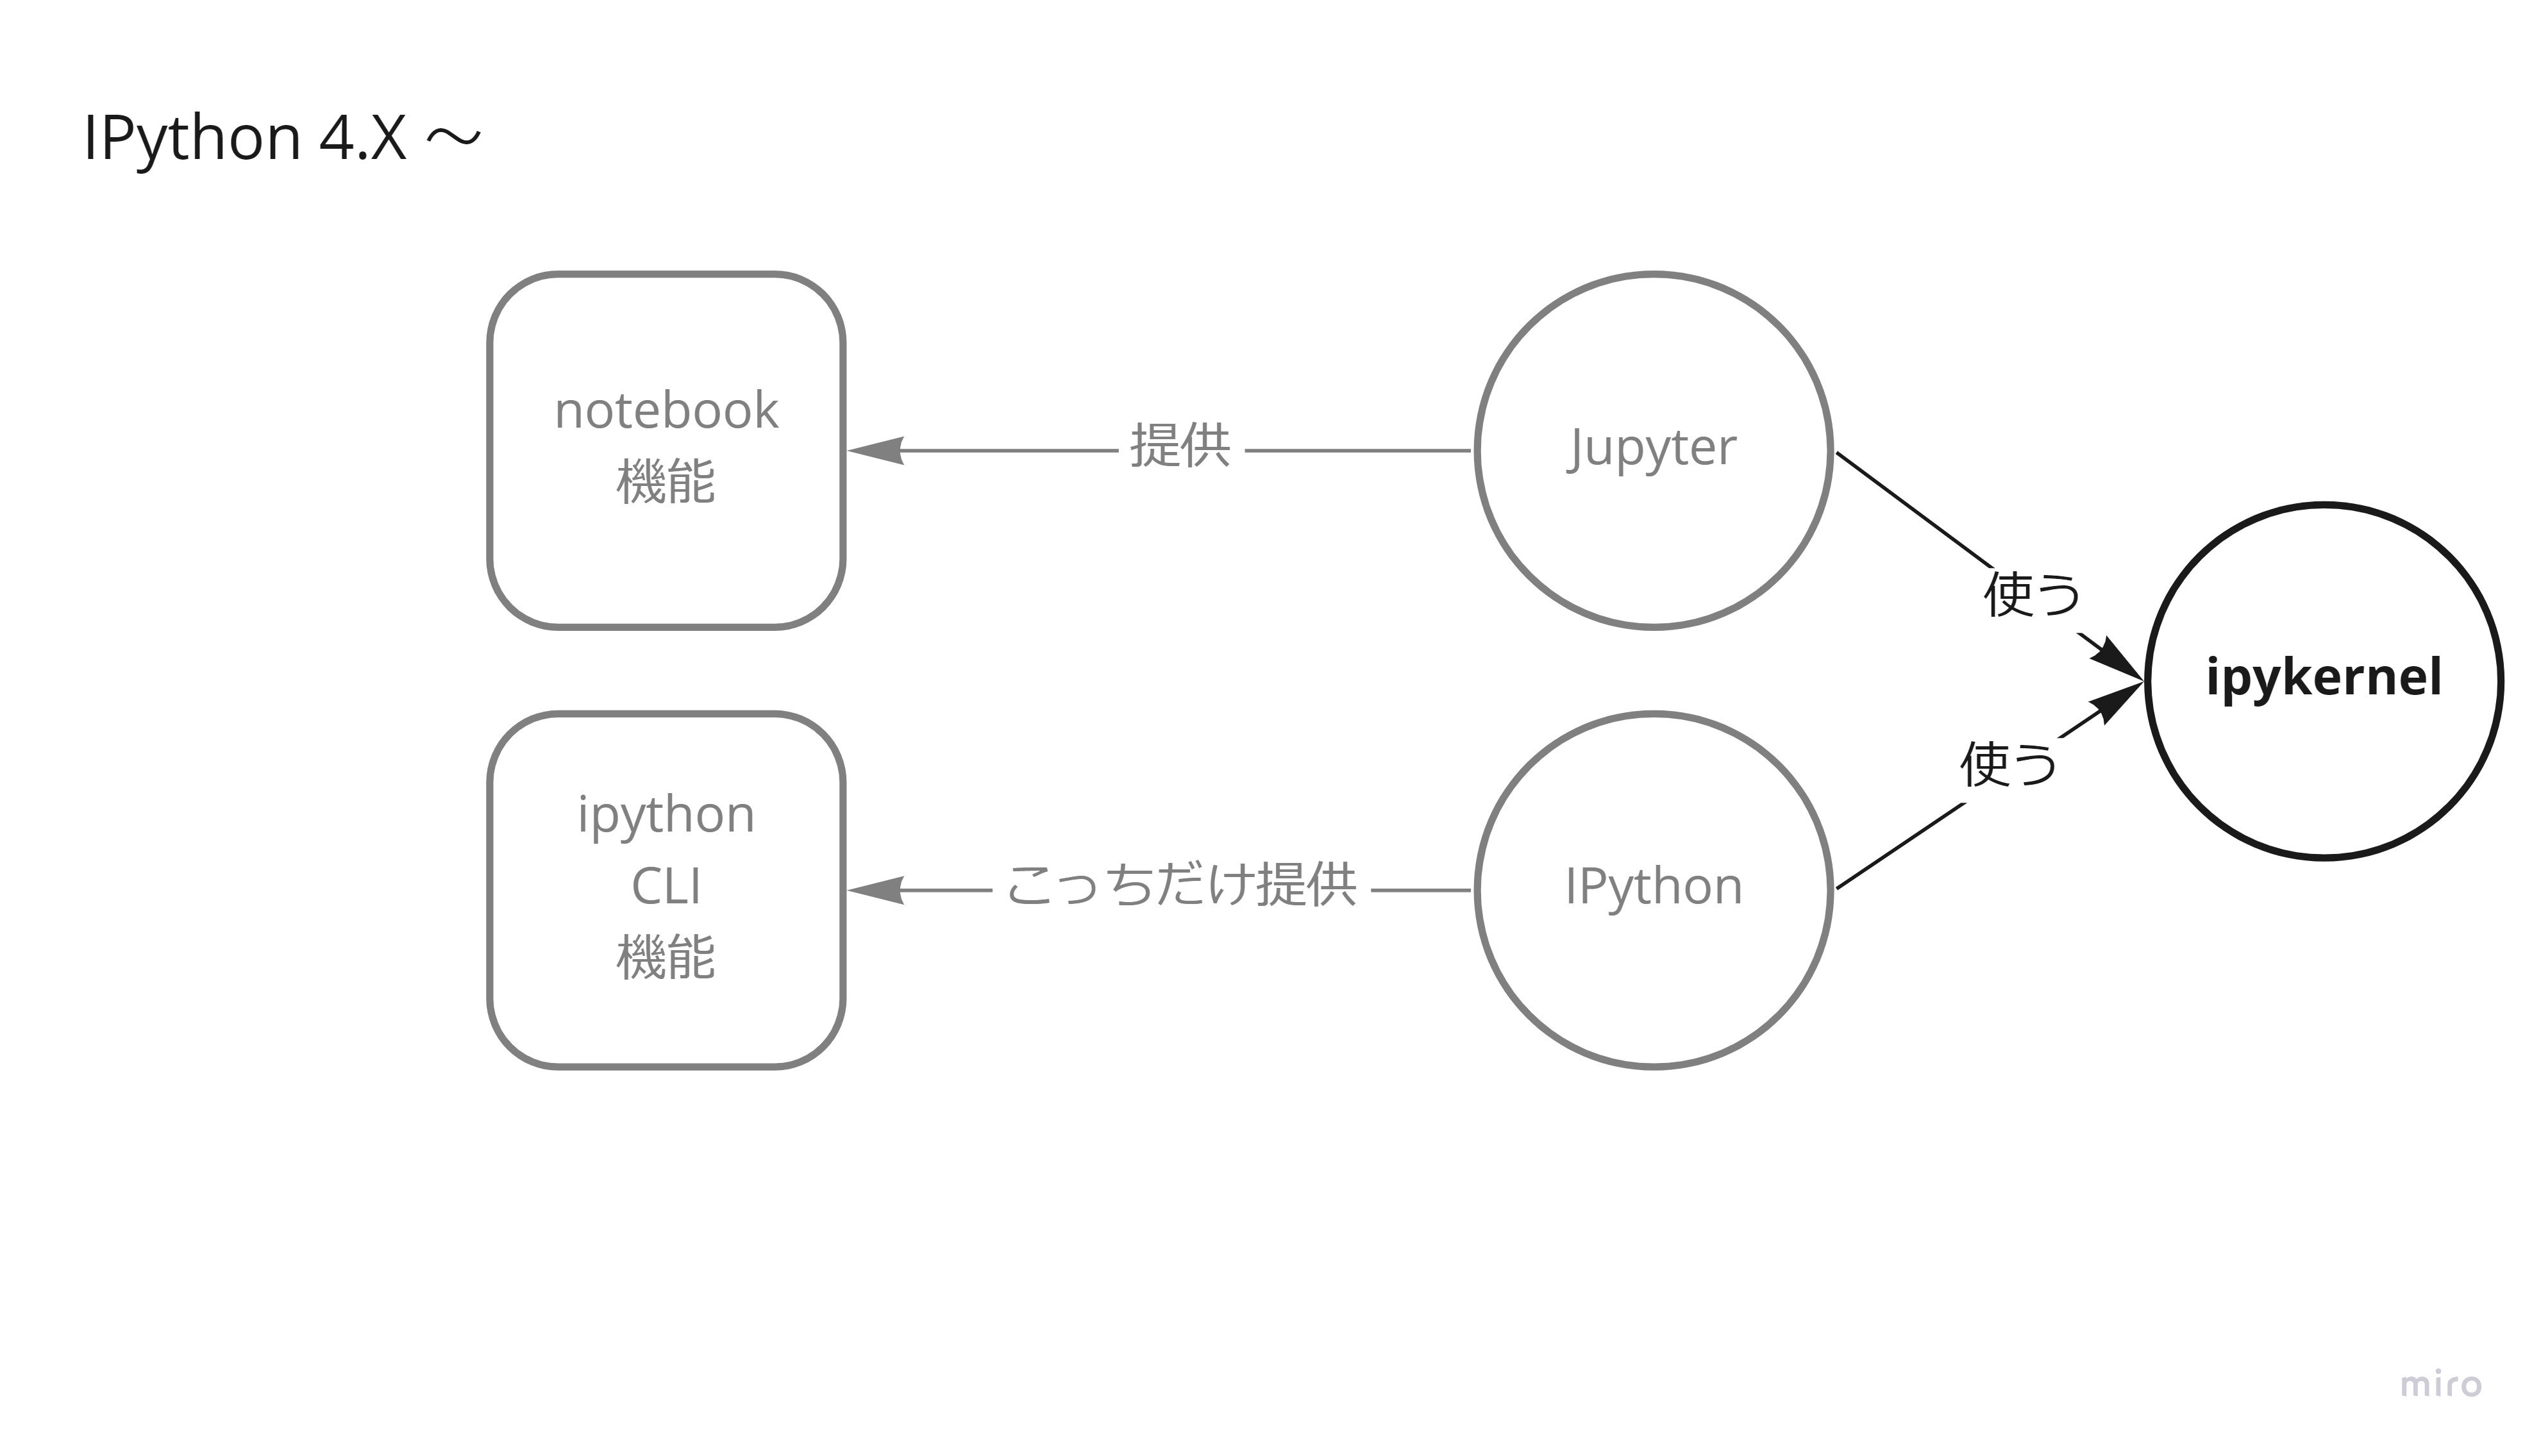 Copy of ipython 4.X (2).jpg